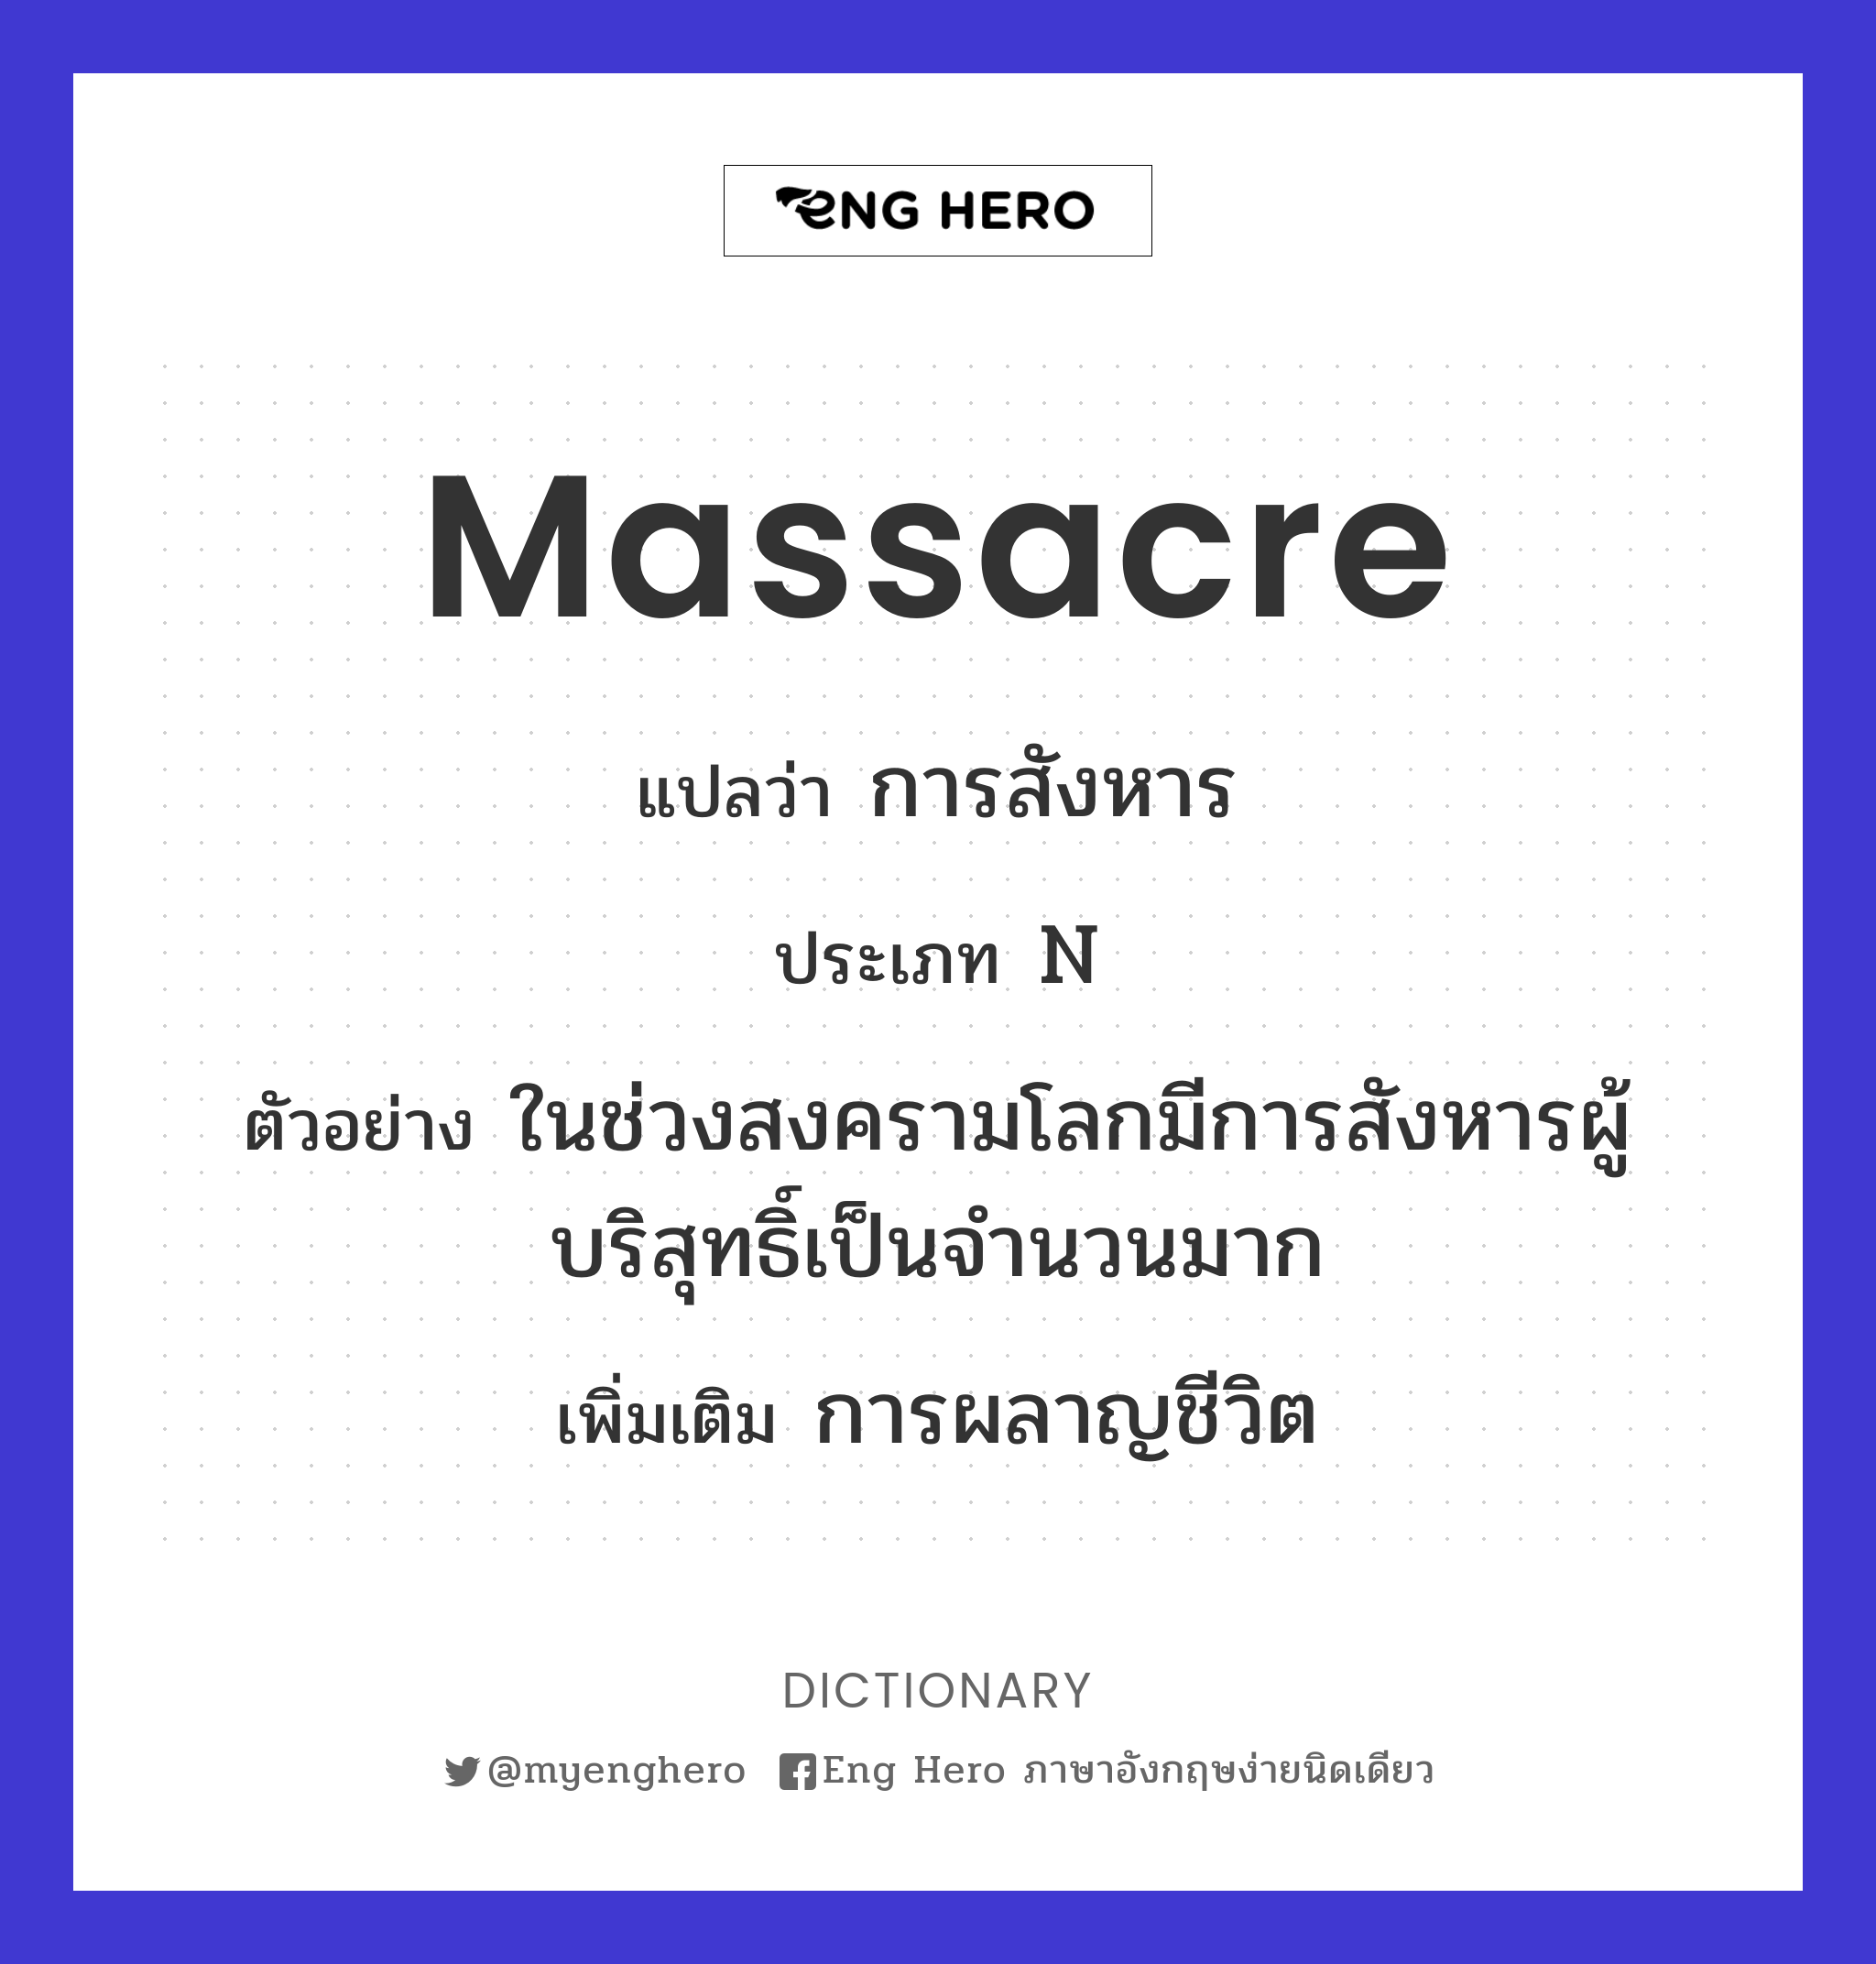 massacre